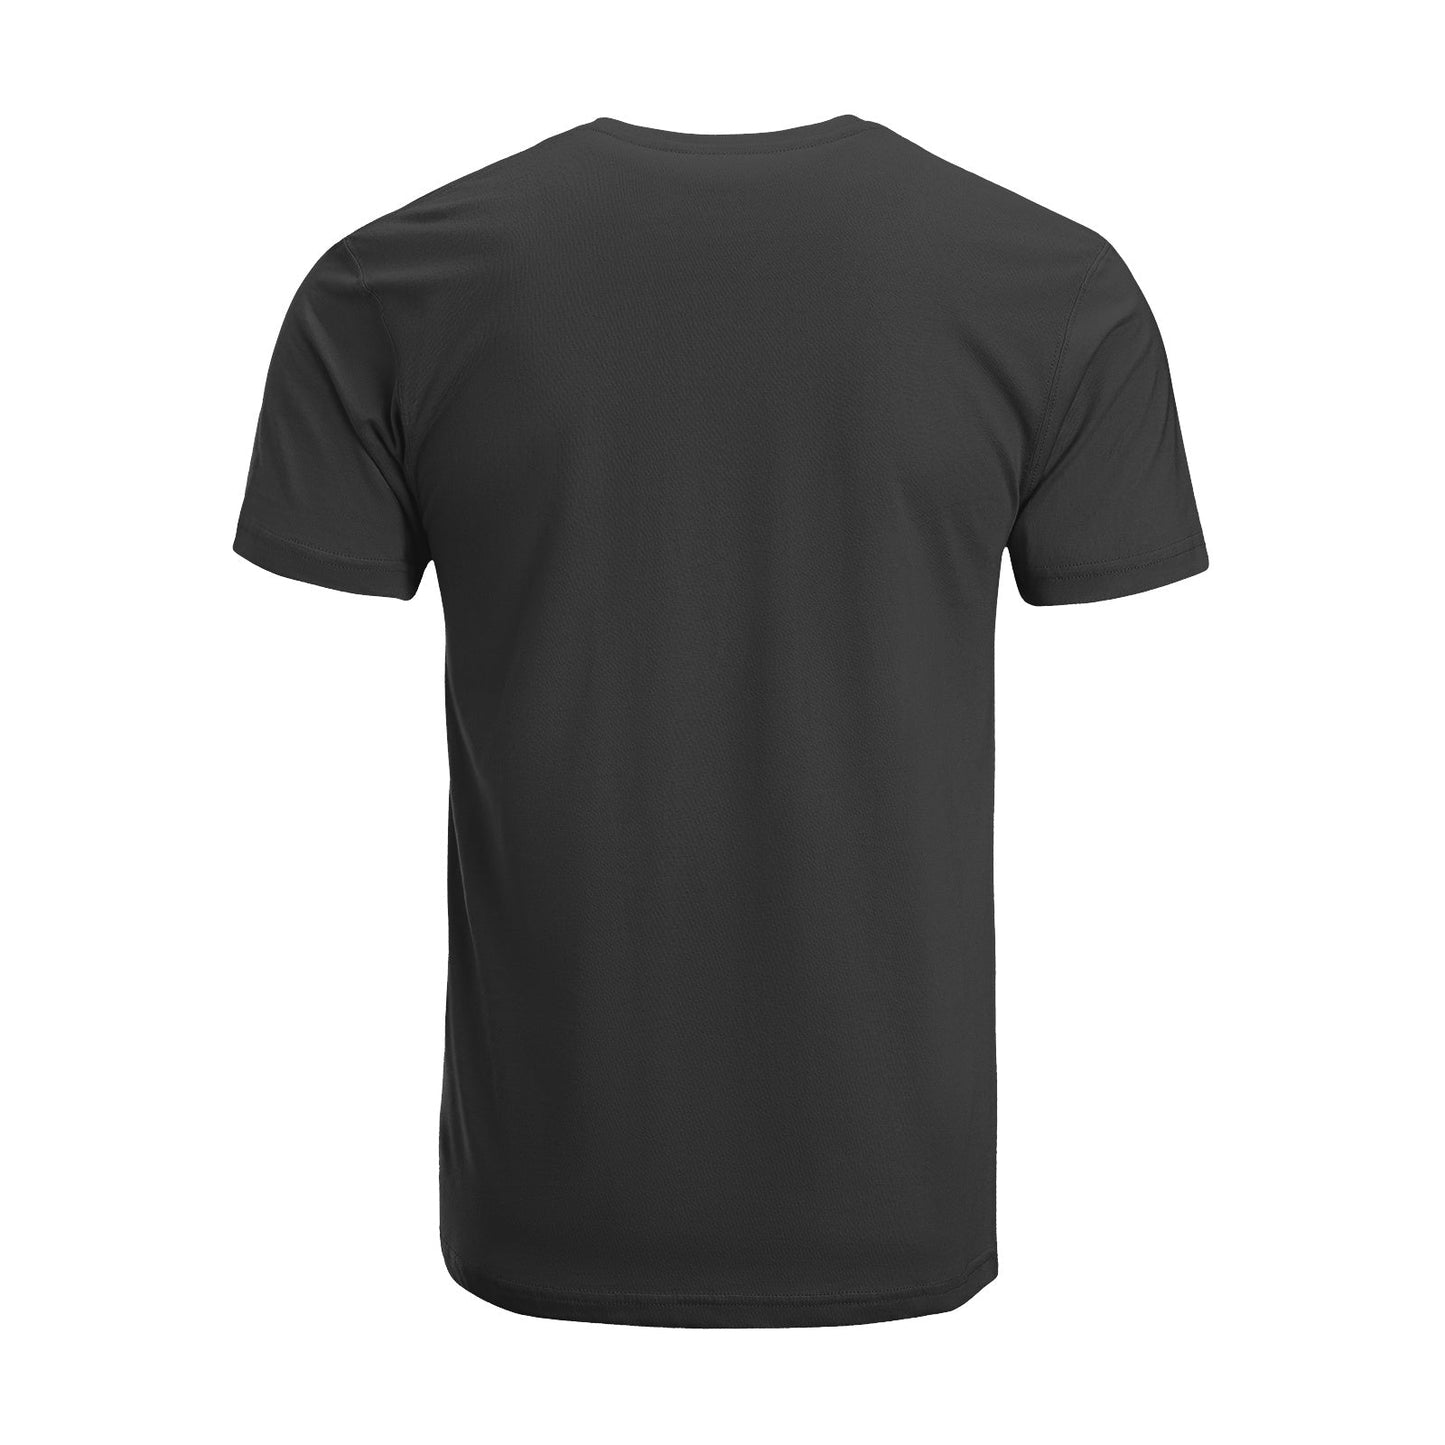 Unisex Short Sleeve Crew Neck Cotton Jersey T-Shirt MOM 29